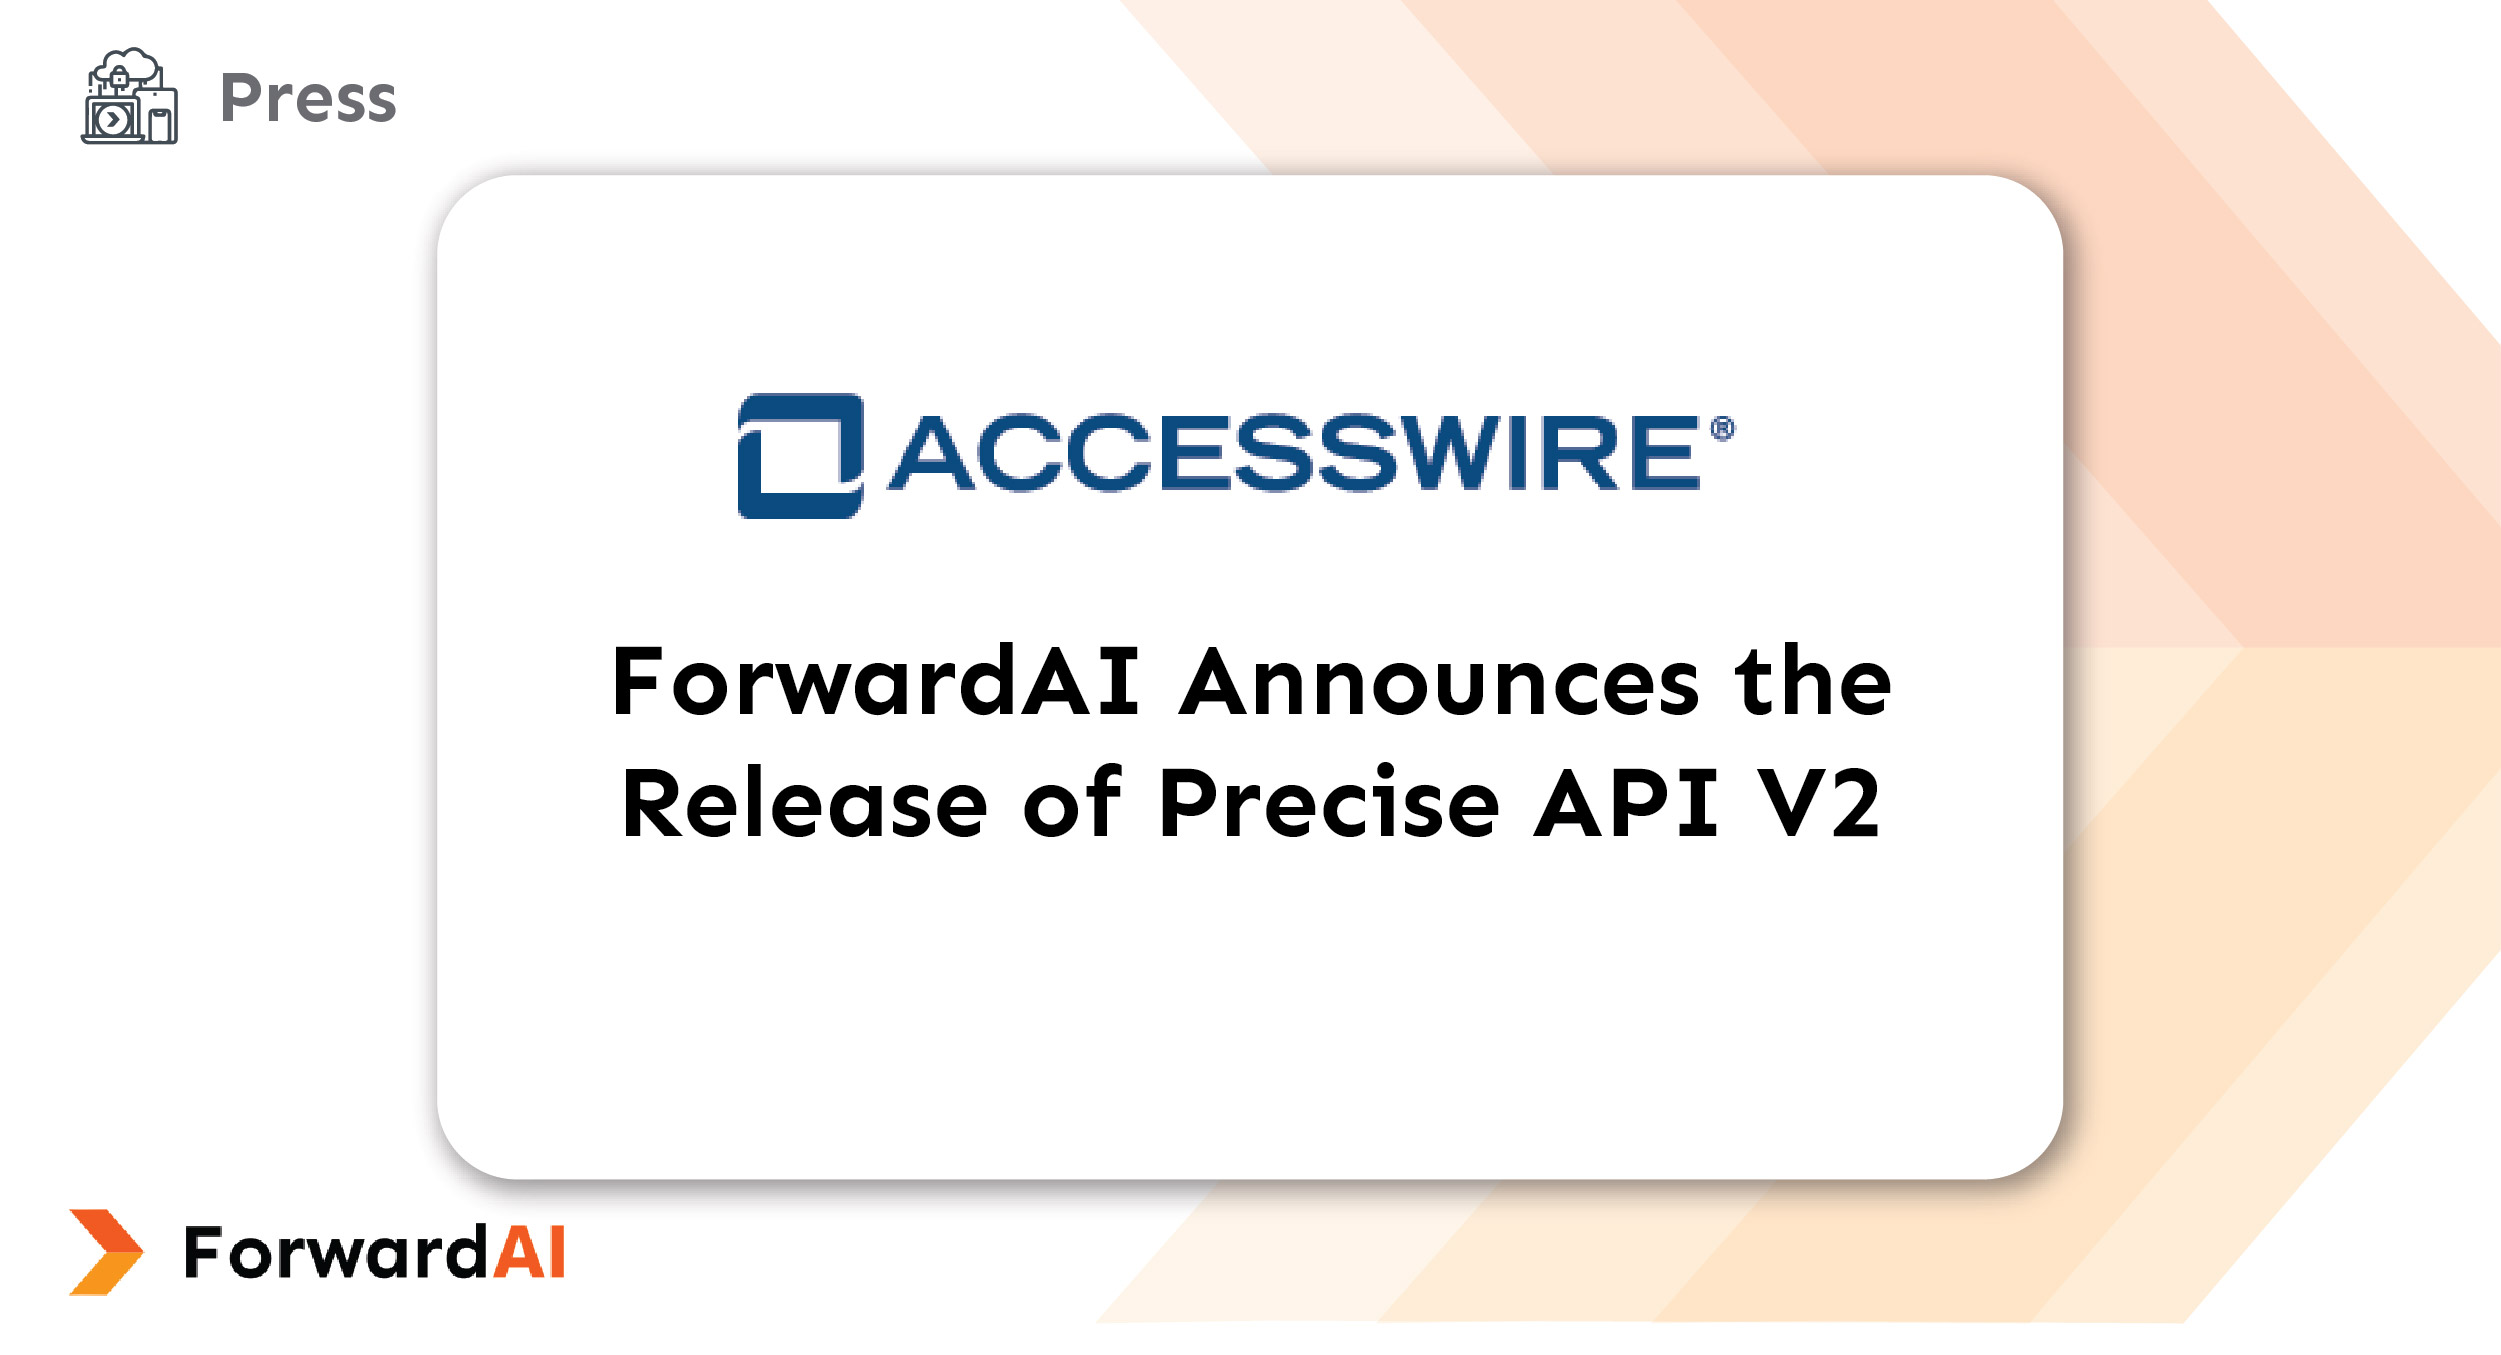 Press: ForwardAI Announces the Release of Precise API V2 title card